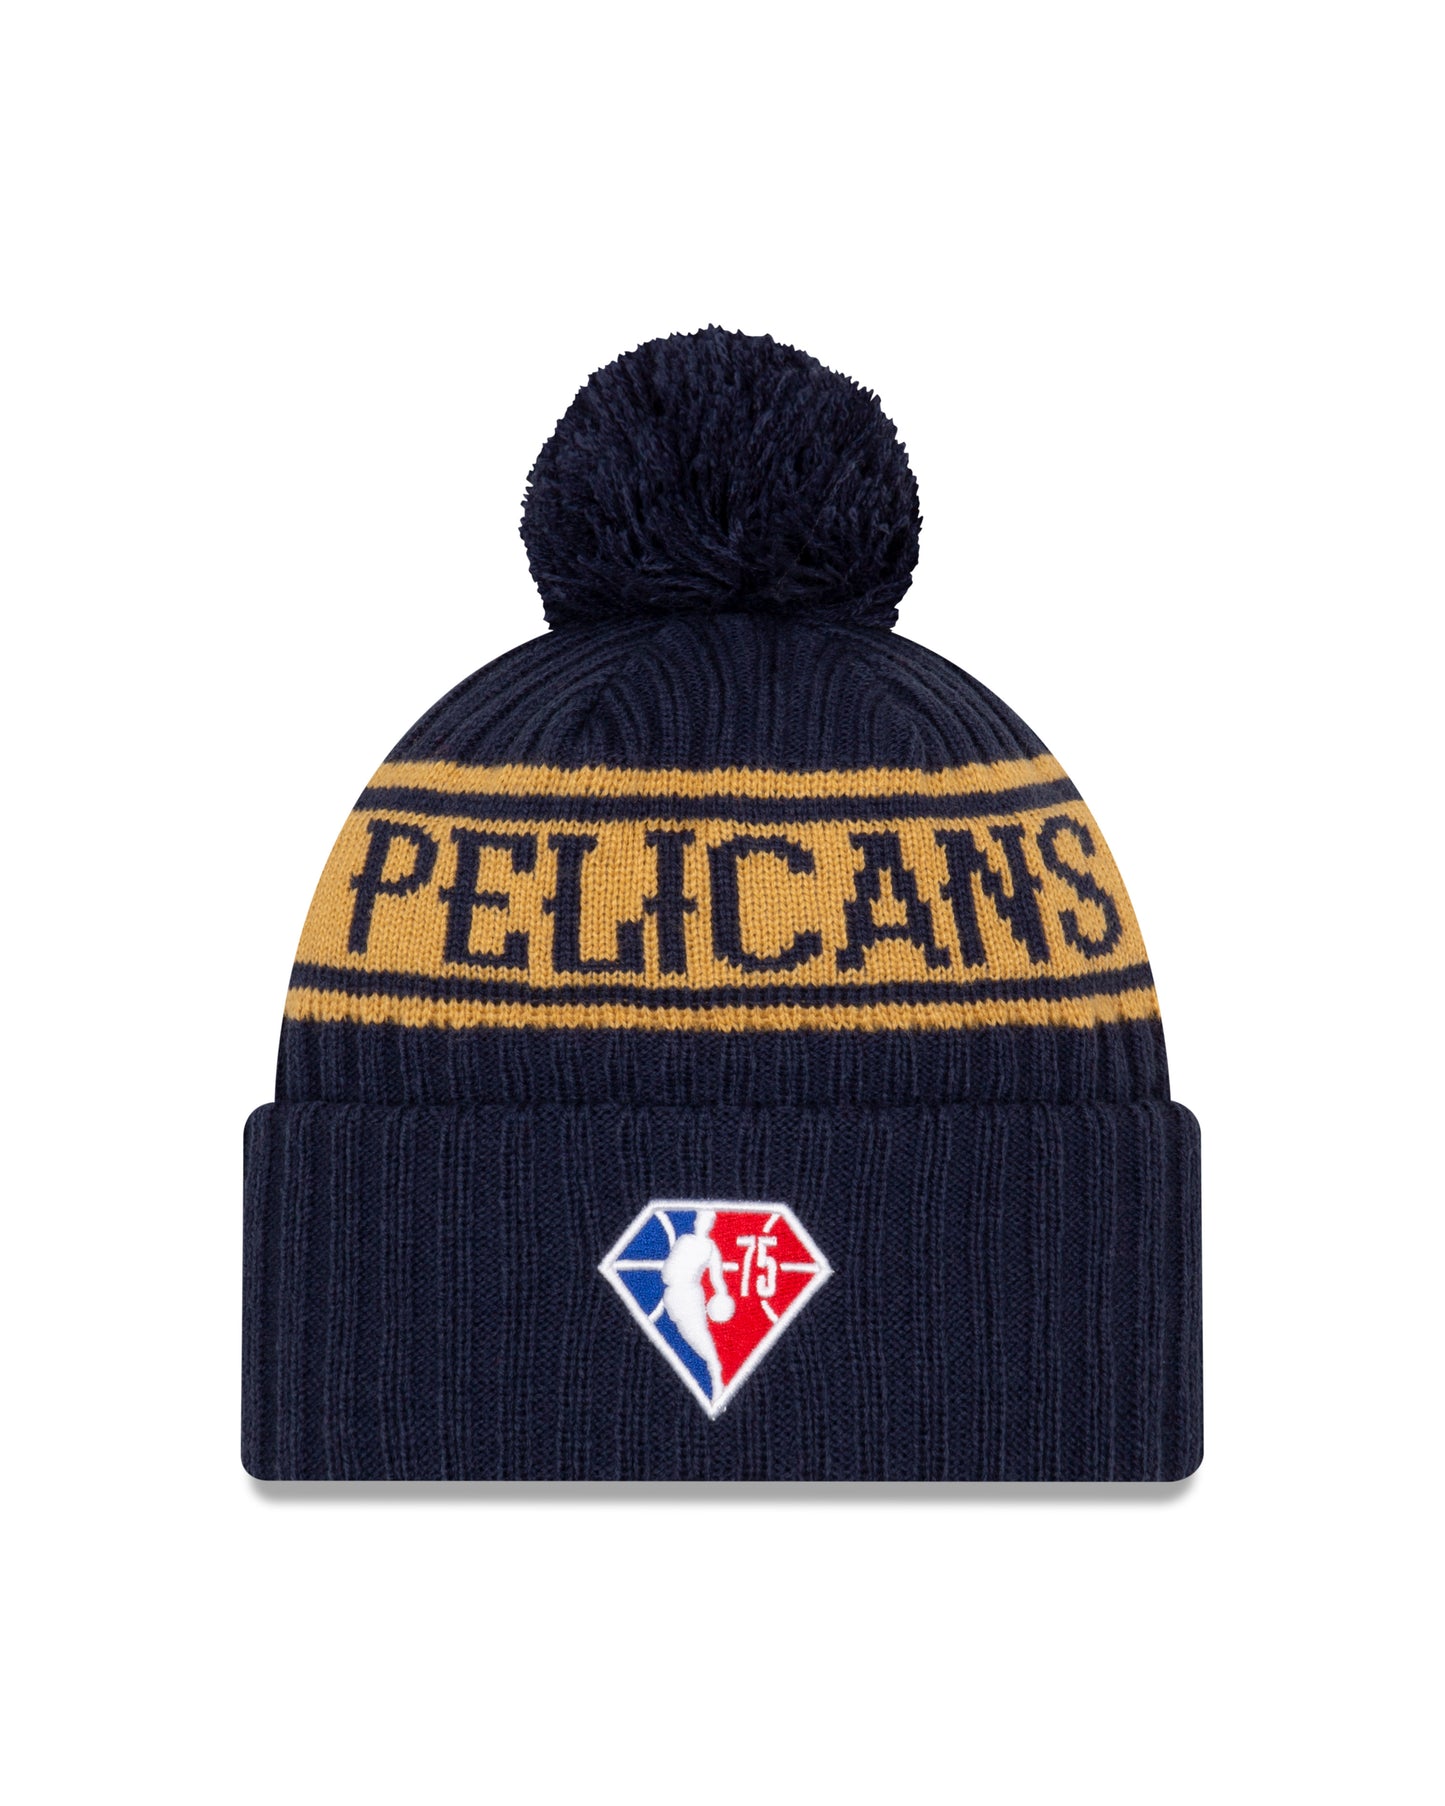 New Orleans Pelicans New Era Draft Knit Hat